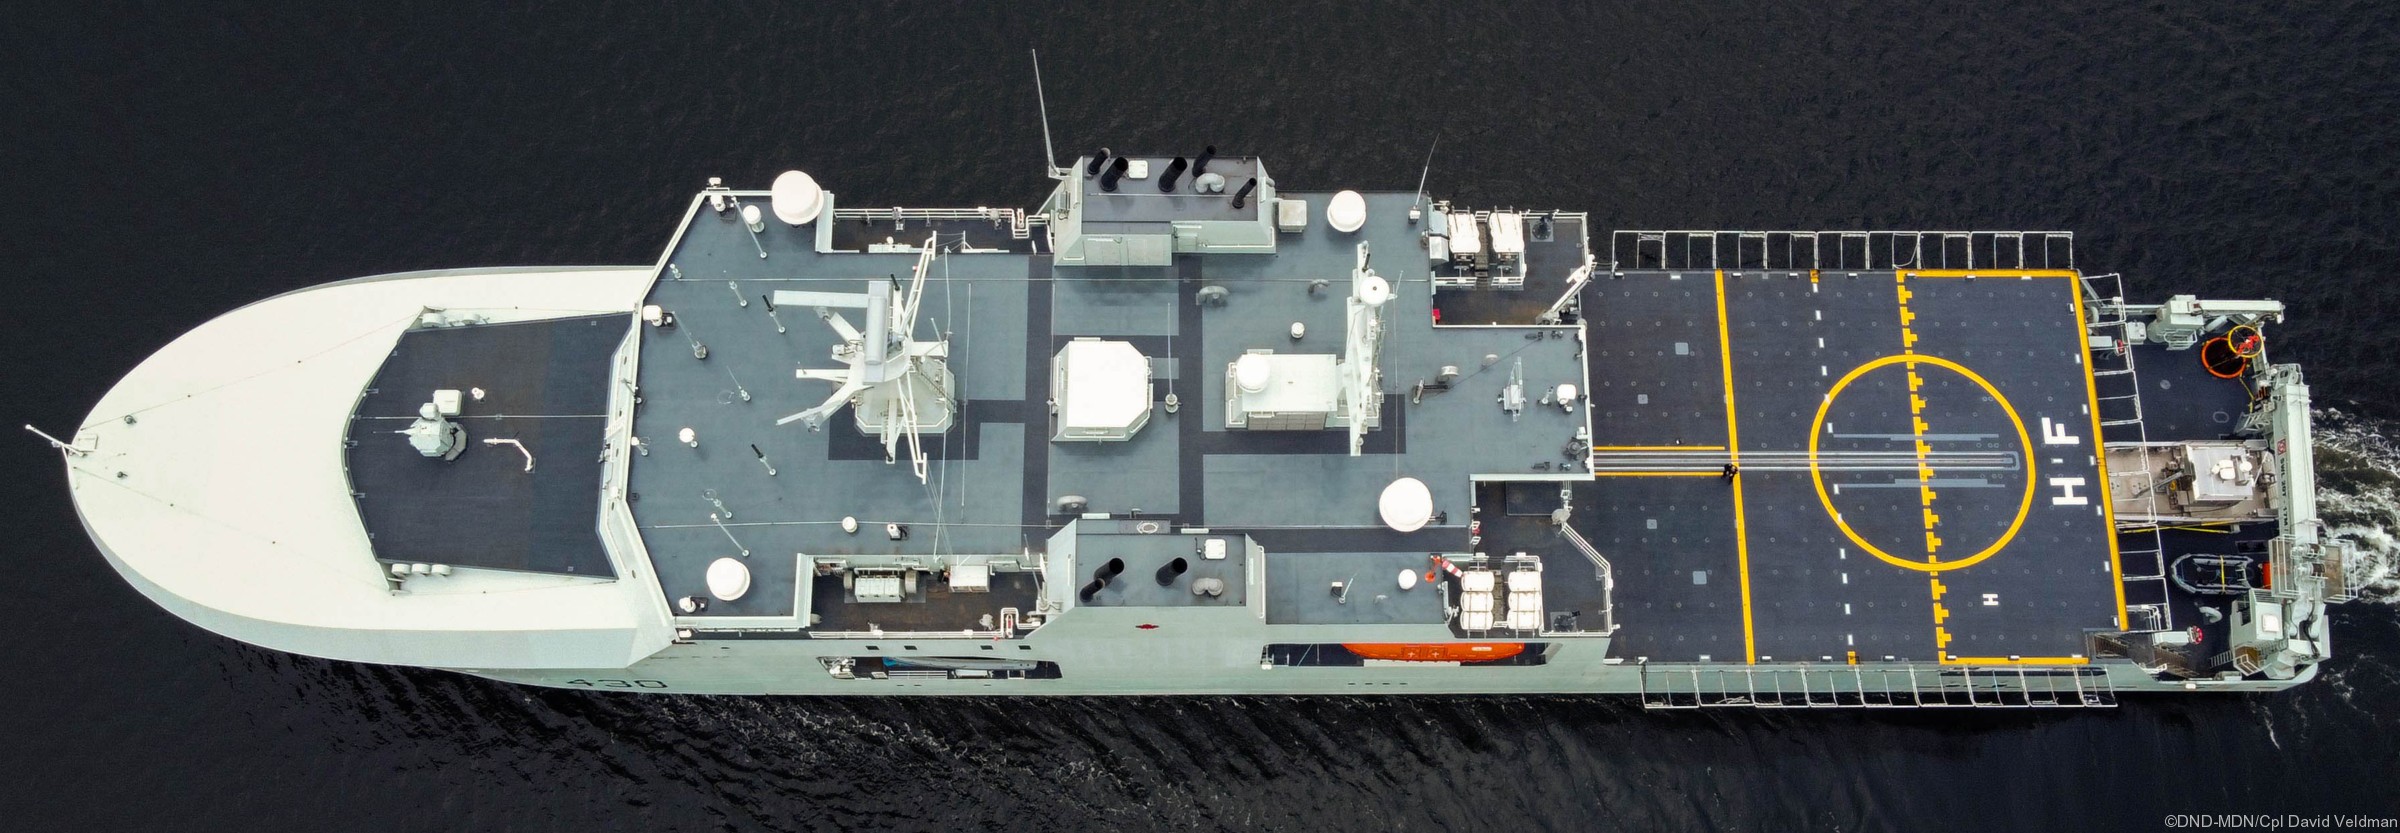 aopv-430 hmcs harry dewolf arctic offshore patrol vessel ncsm royal canadian navy 14